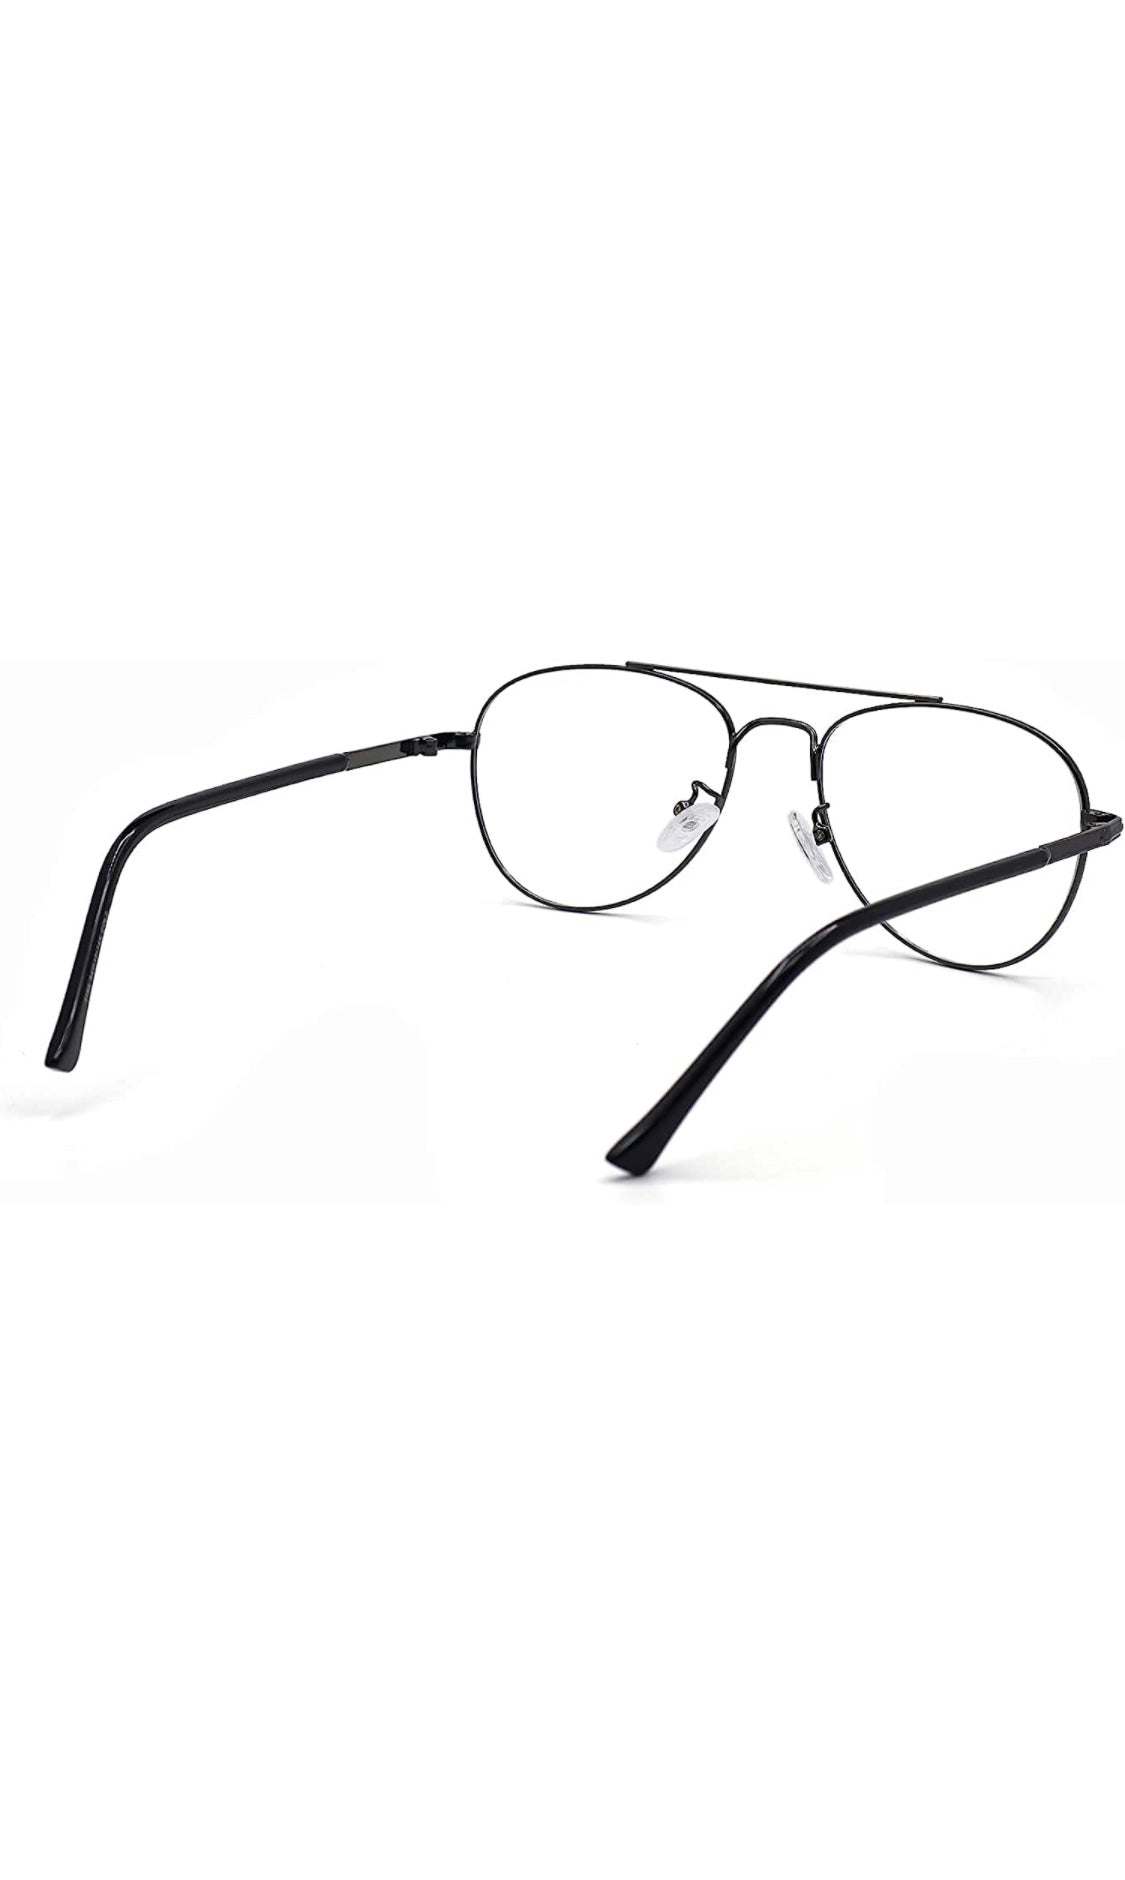 Jodykoes® Unisex Aviator Blu Cut Blue ray Protection Anti Glare Zero Power Computer Protection Eyeglasses For Men and Women Spectacle Frame (Black) - Jodykoes ®